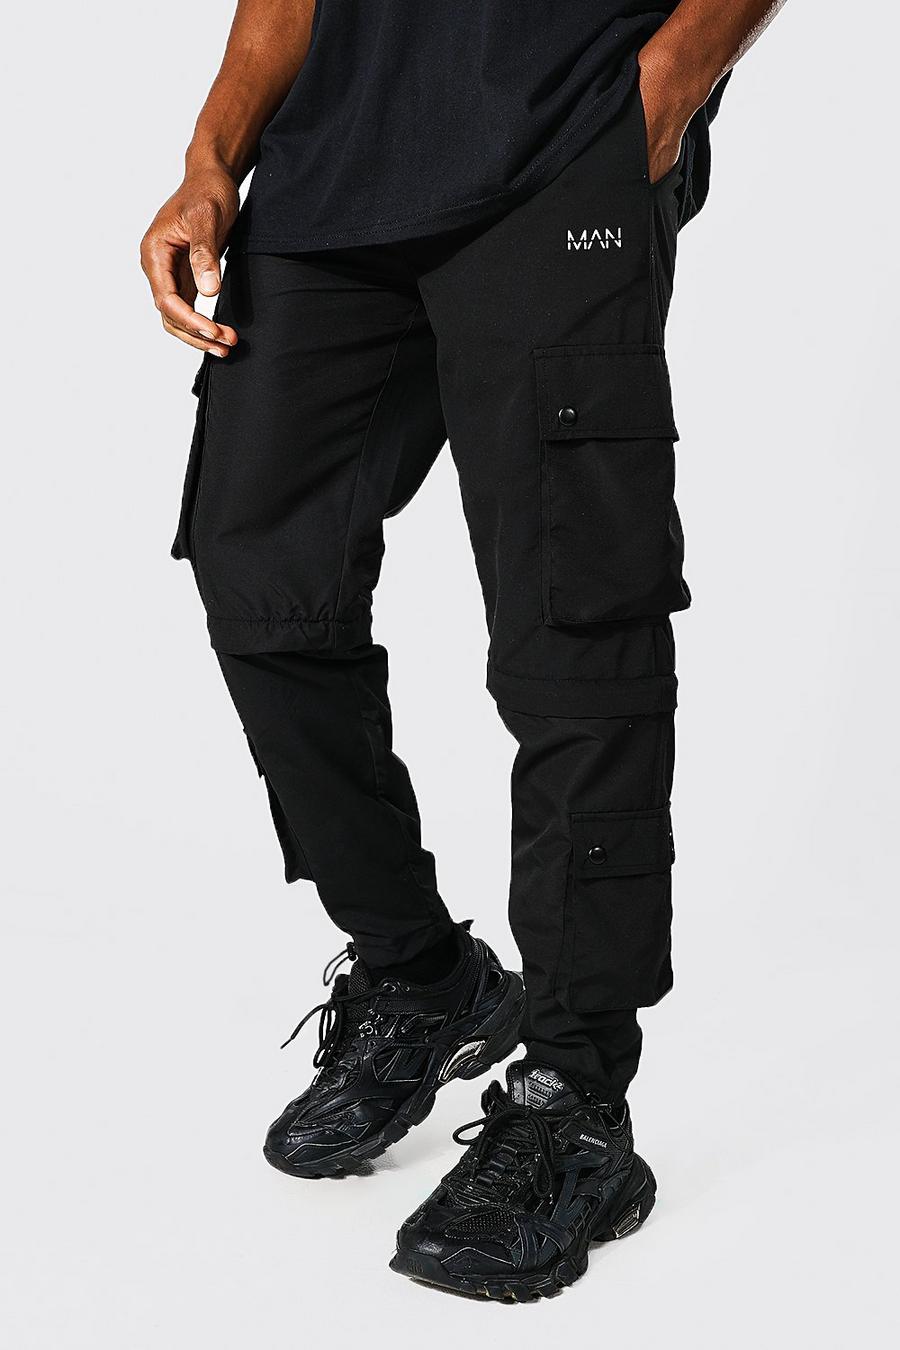 Pantaloni Cargo Man con tasche e zip, Black negro image number 1